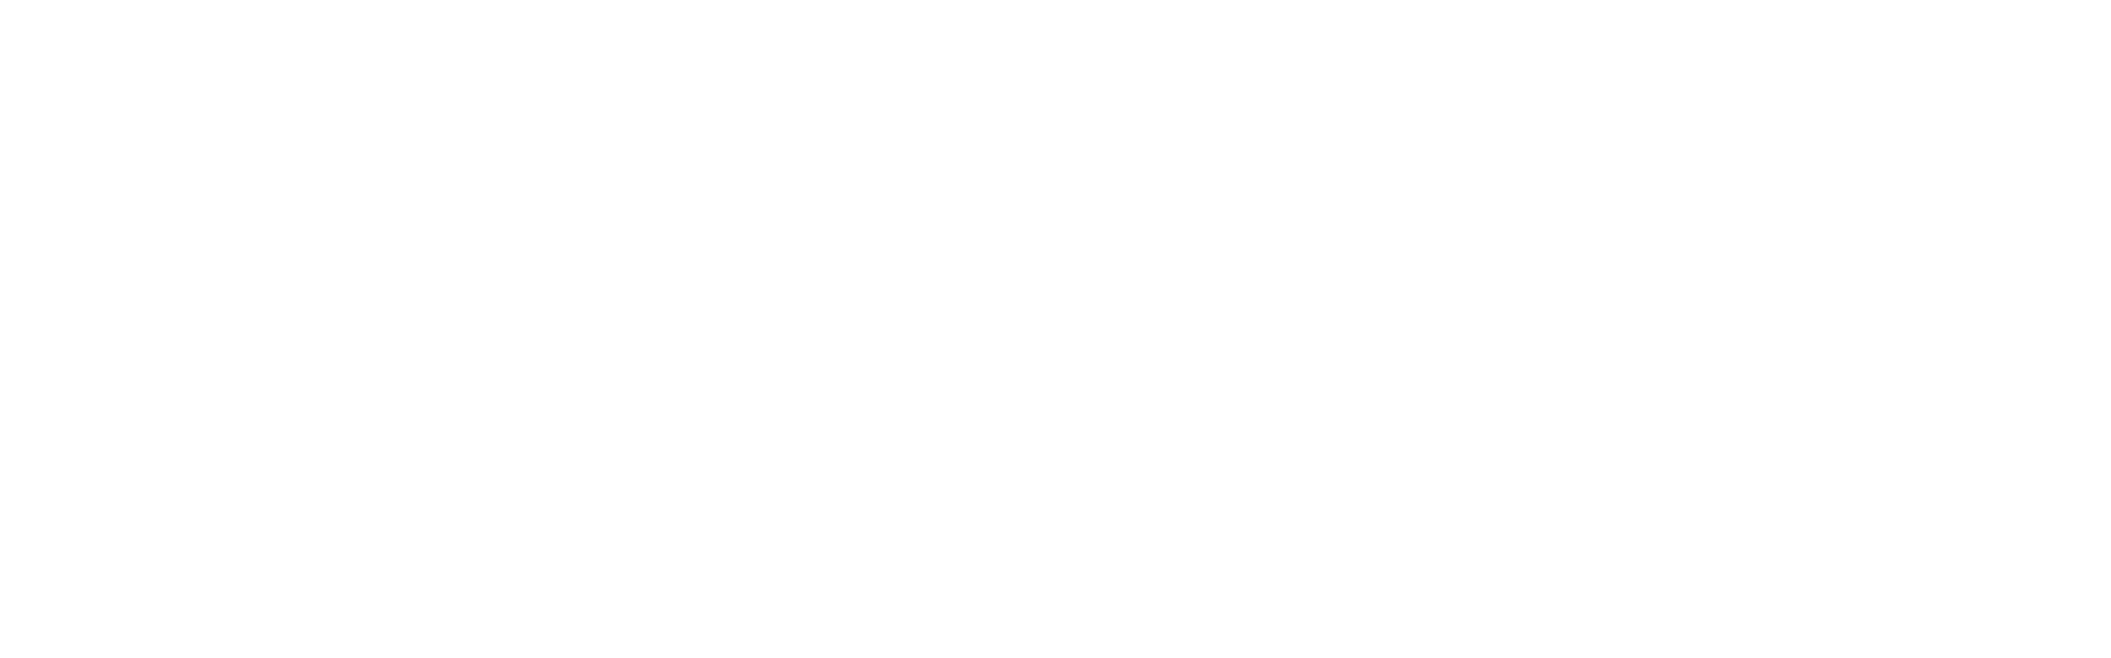 Convict Bitters logo